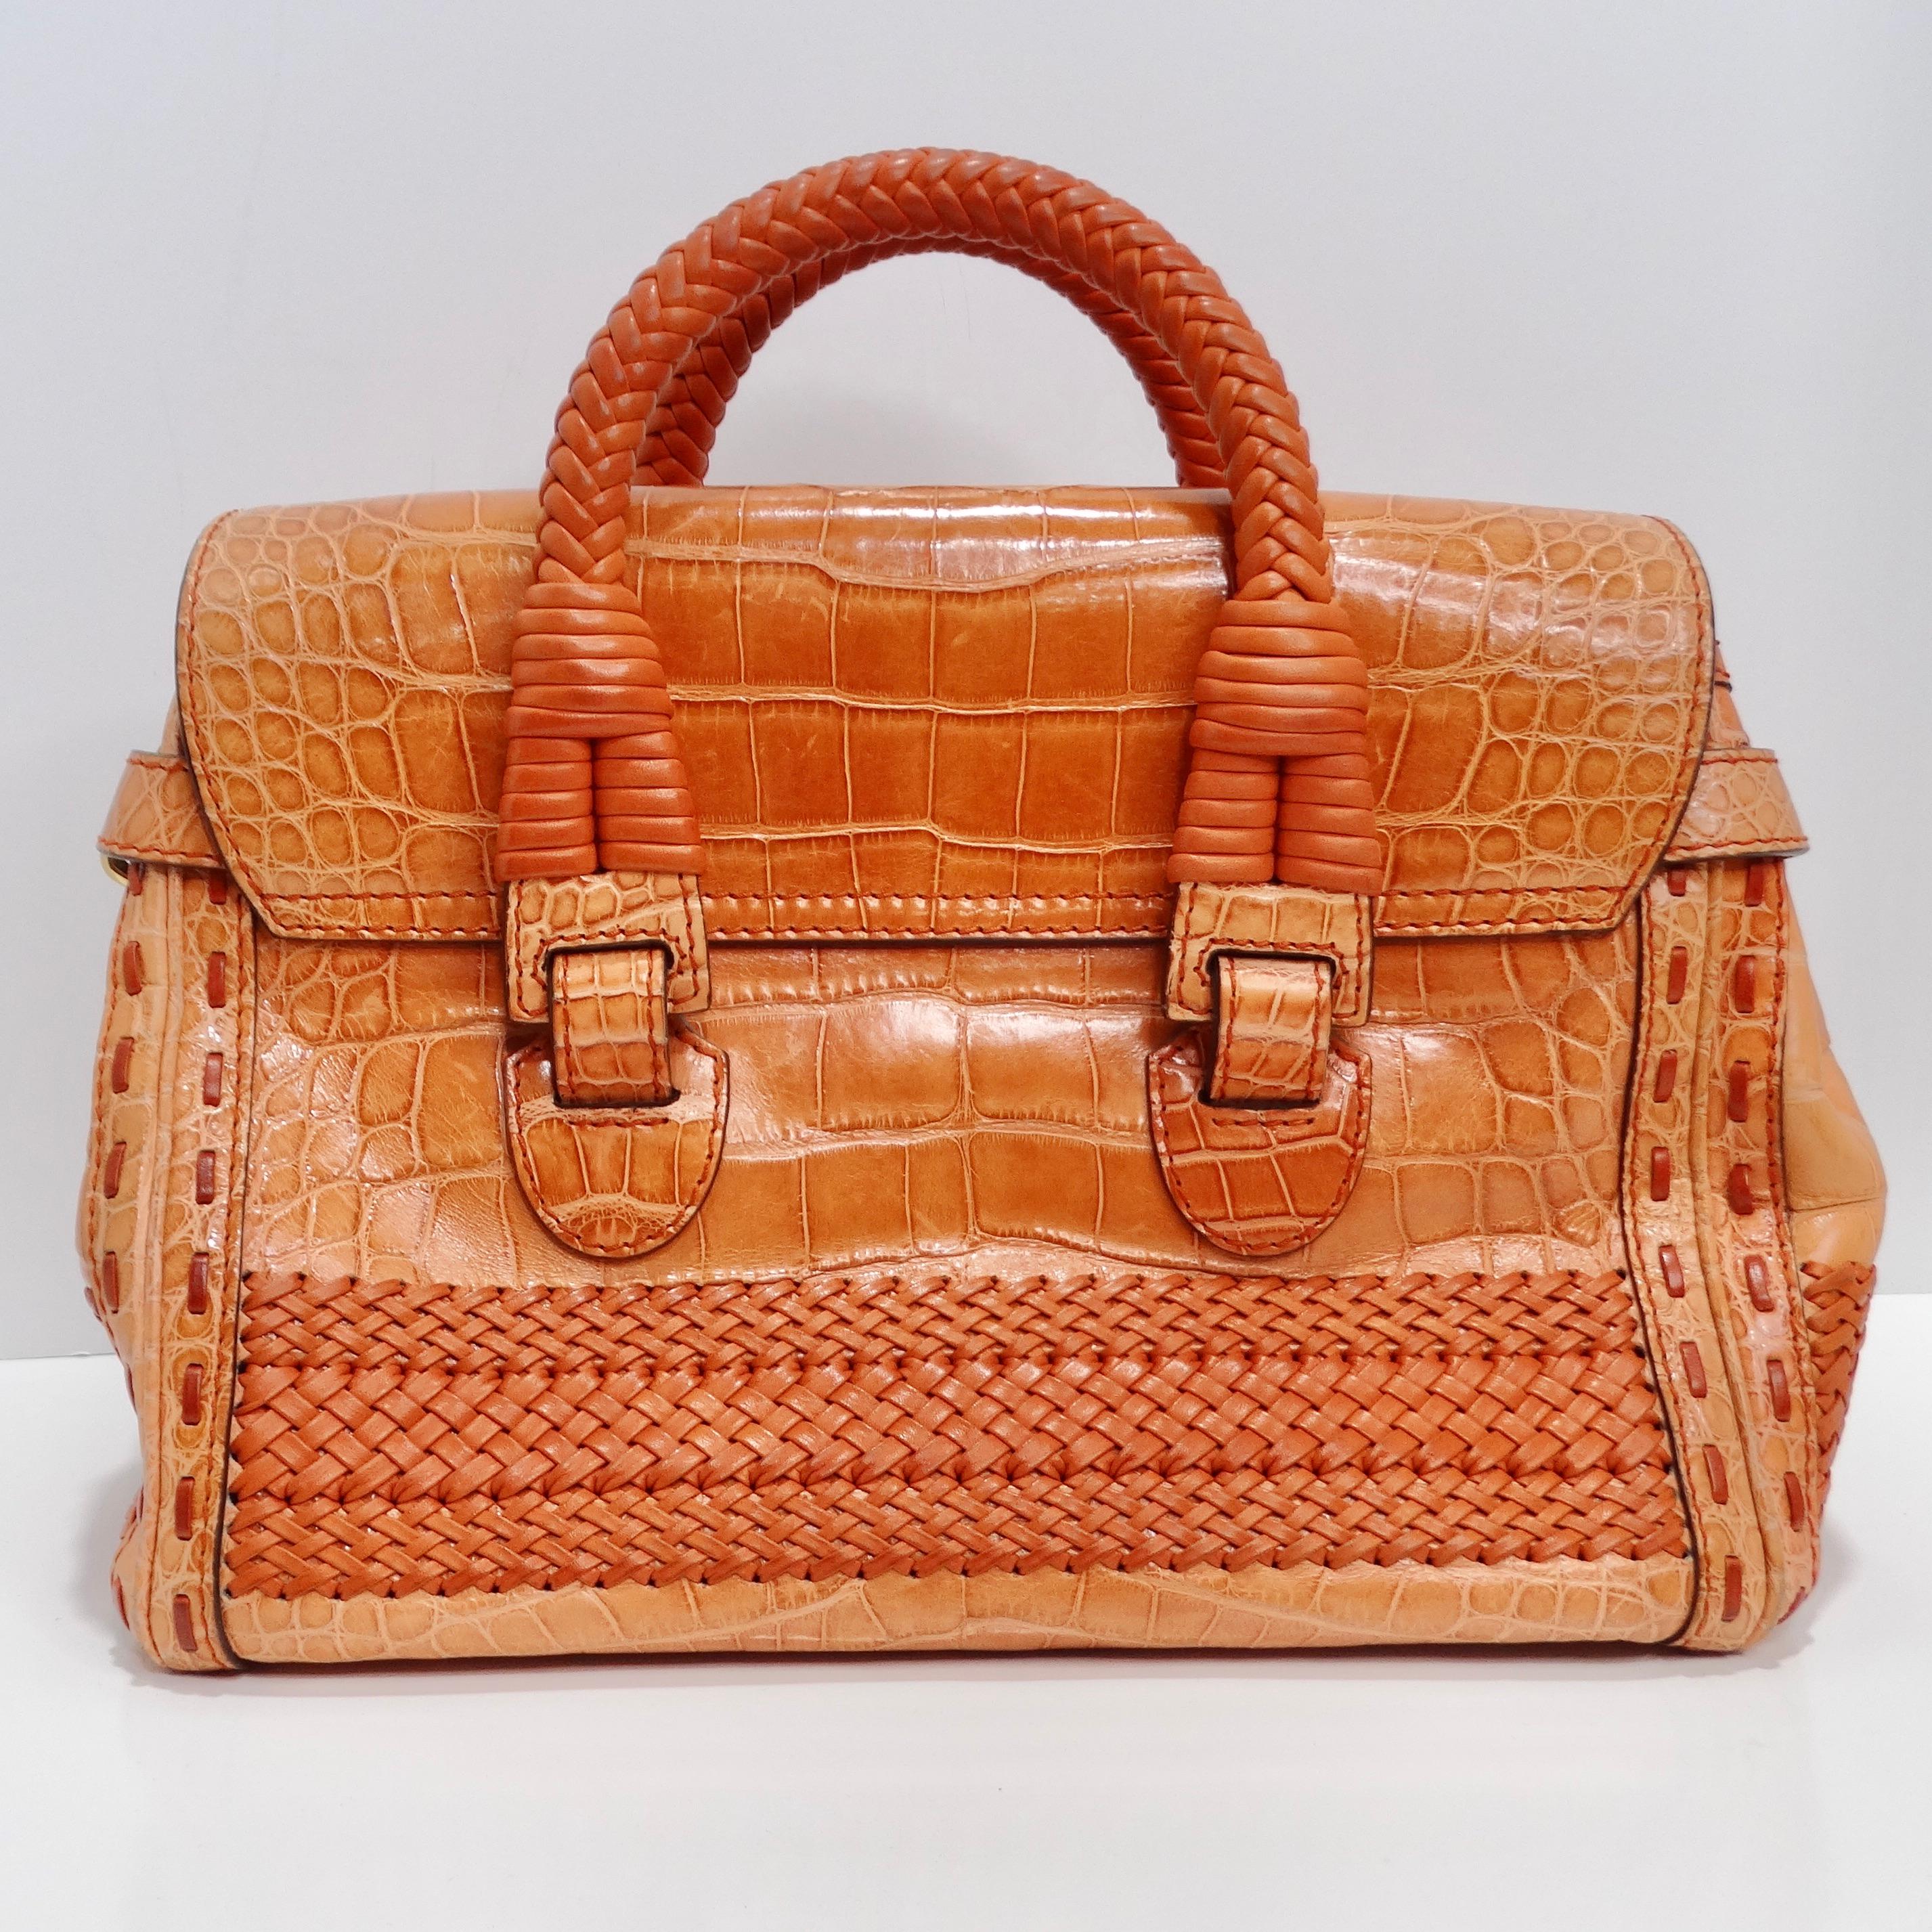 Gucci Rare Orange Crocodile Leather Woven Top Handle Bag For Sale 2